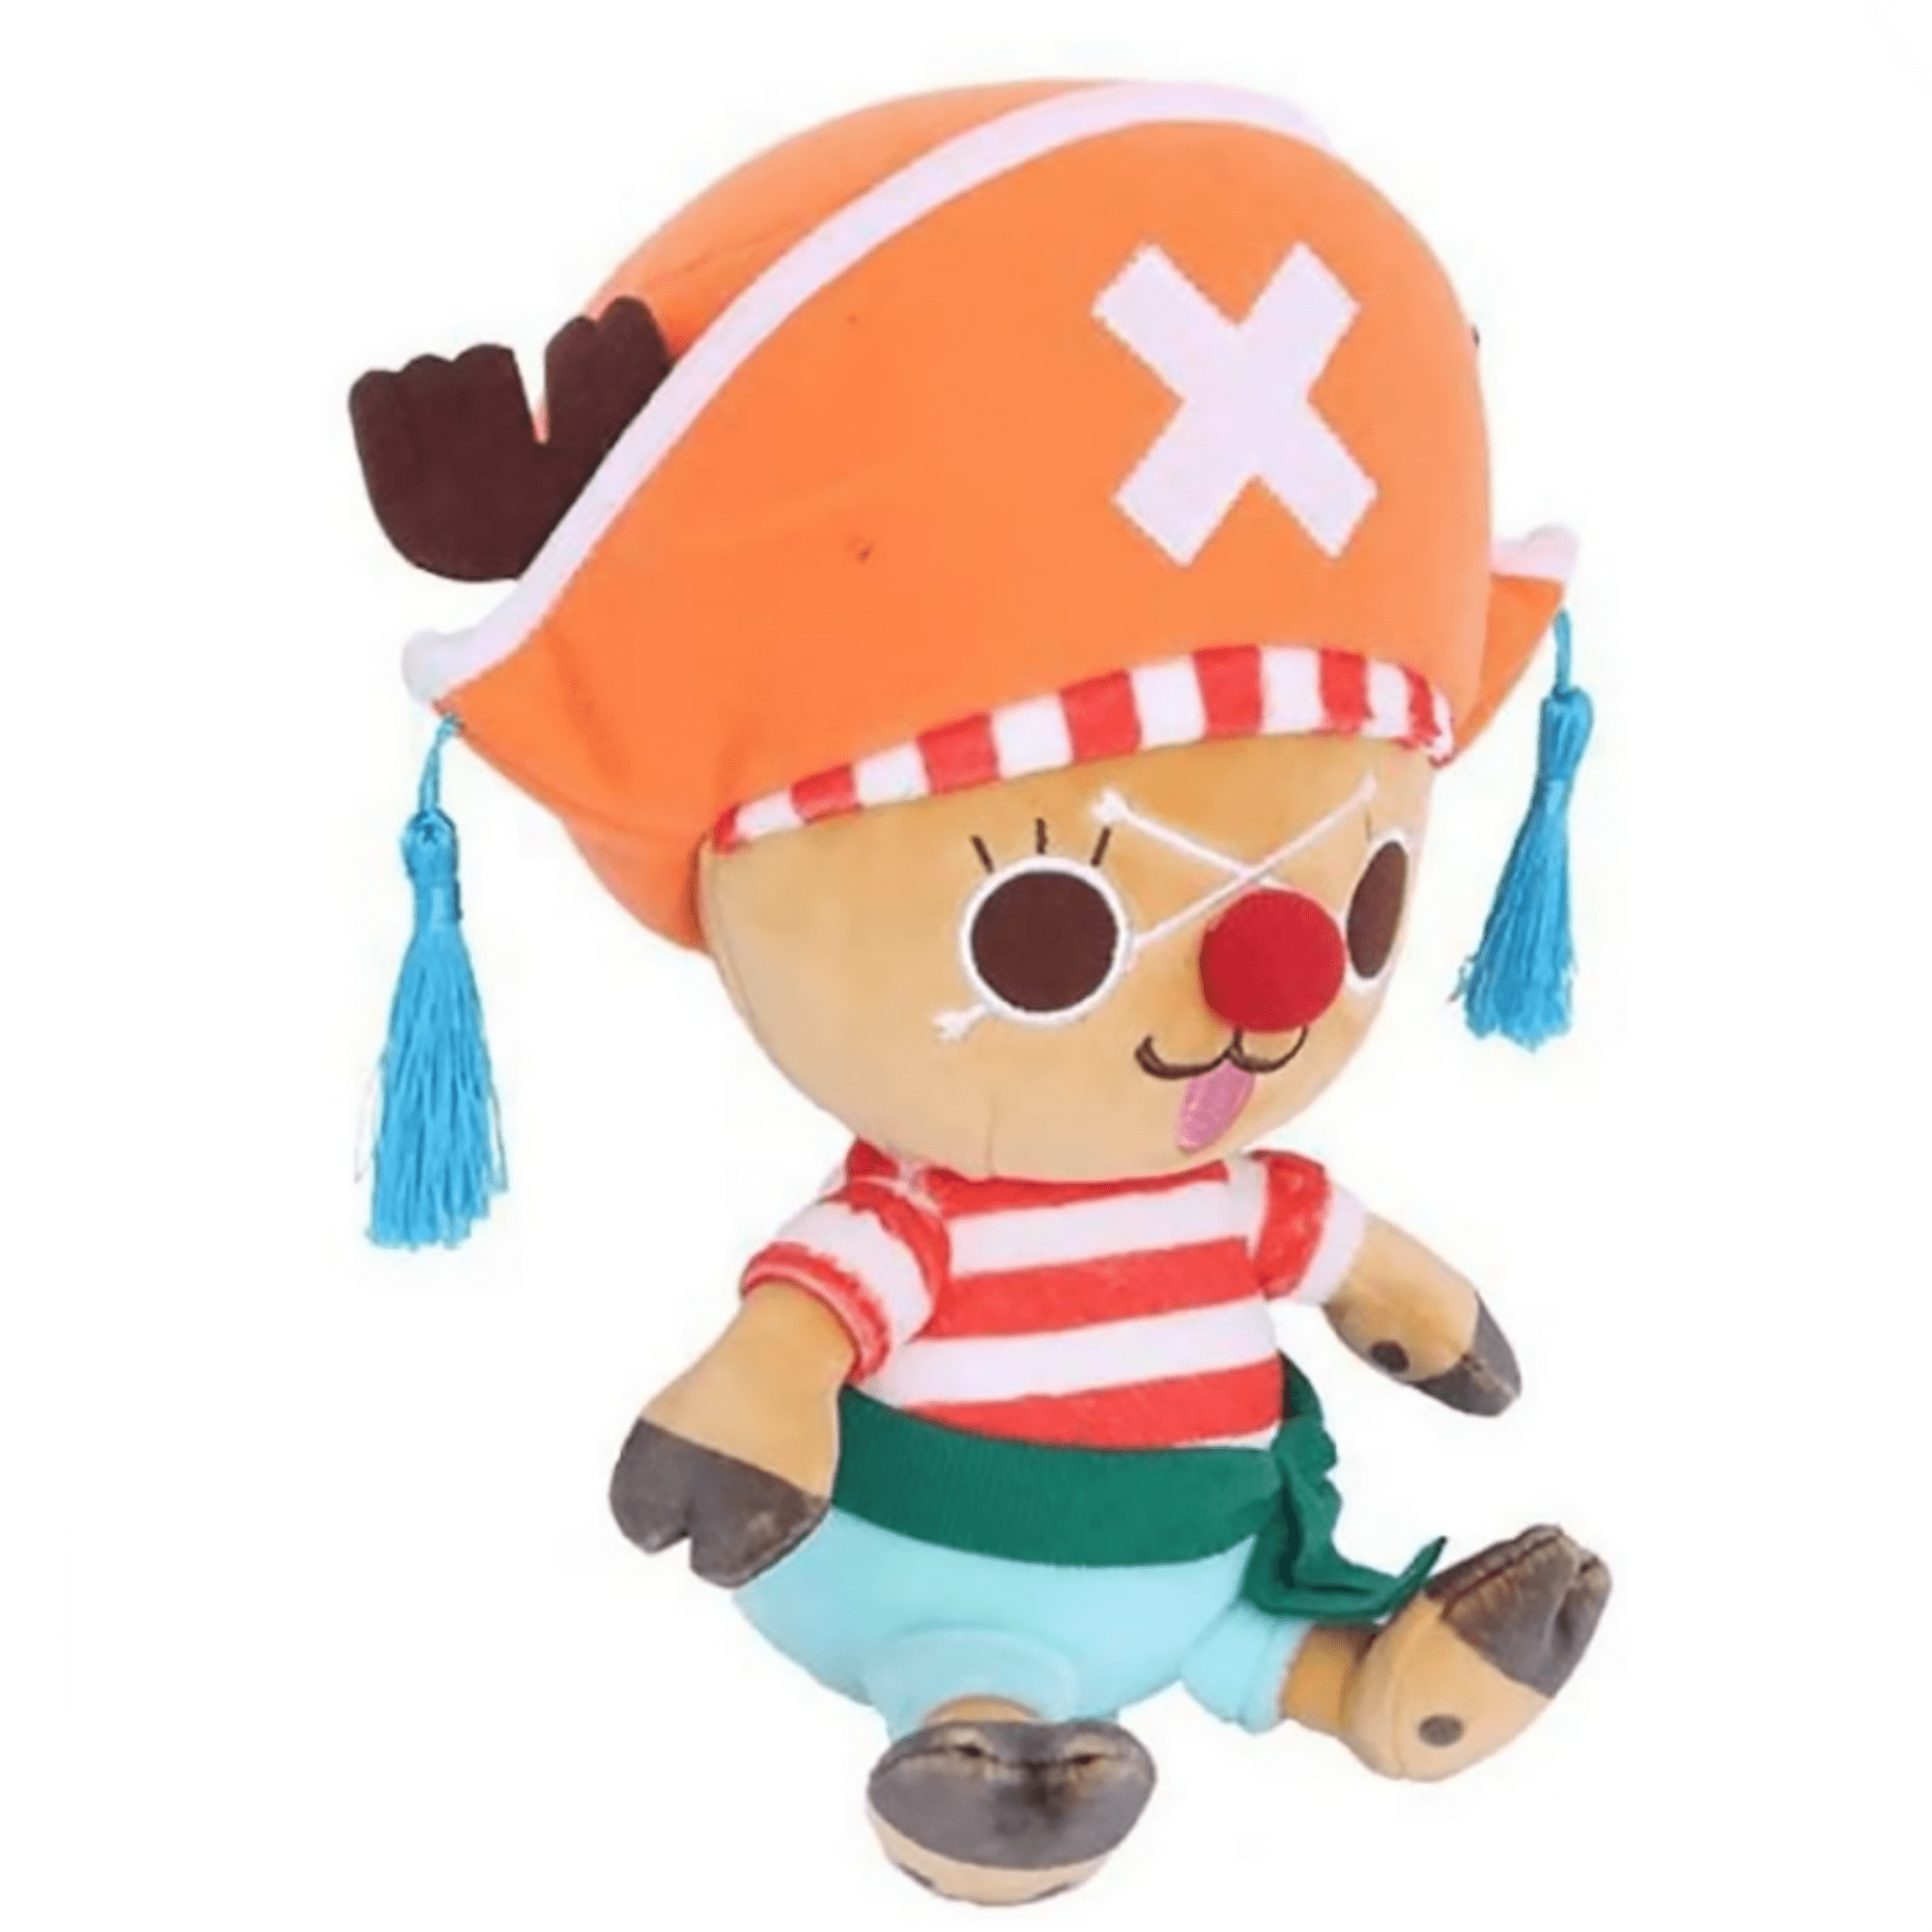 Chopper Ruffy Plüsch Toy One Piece